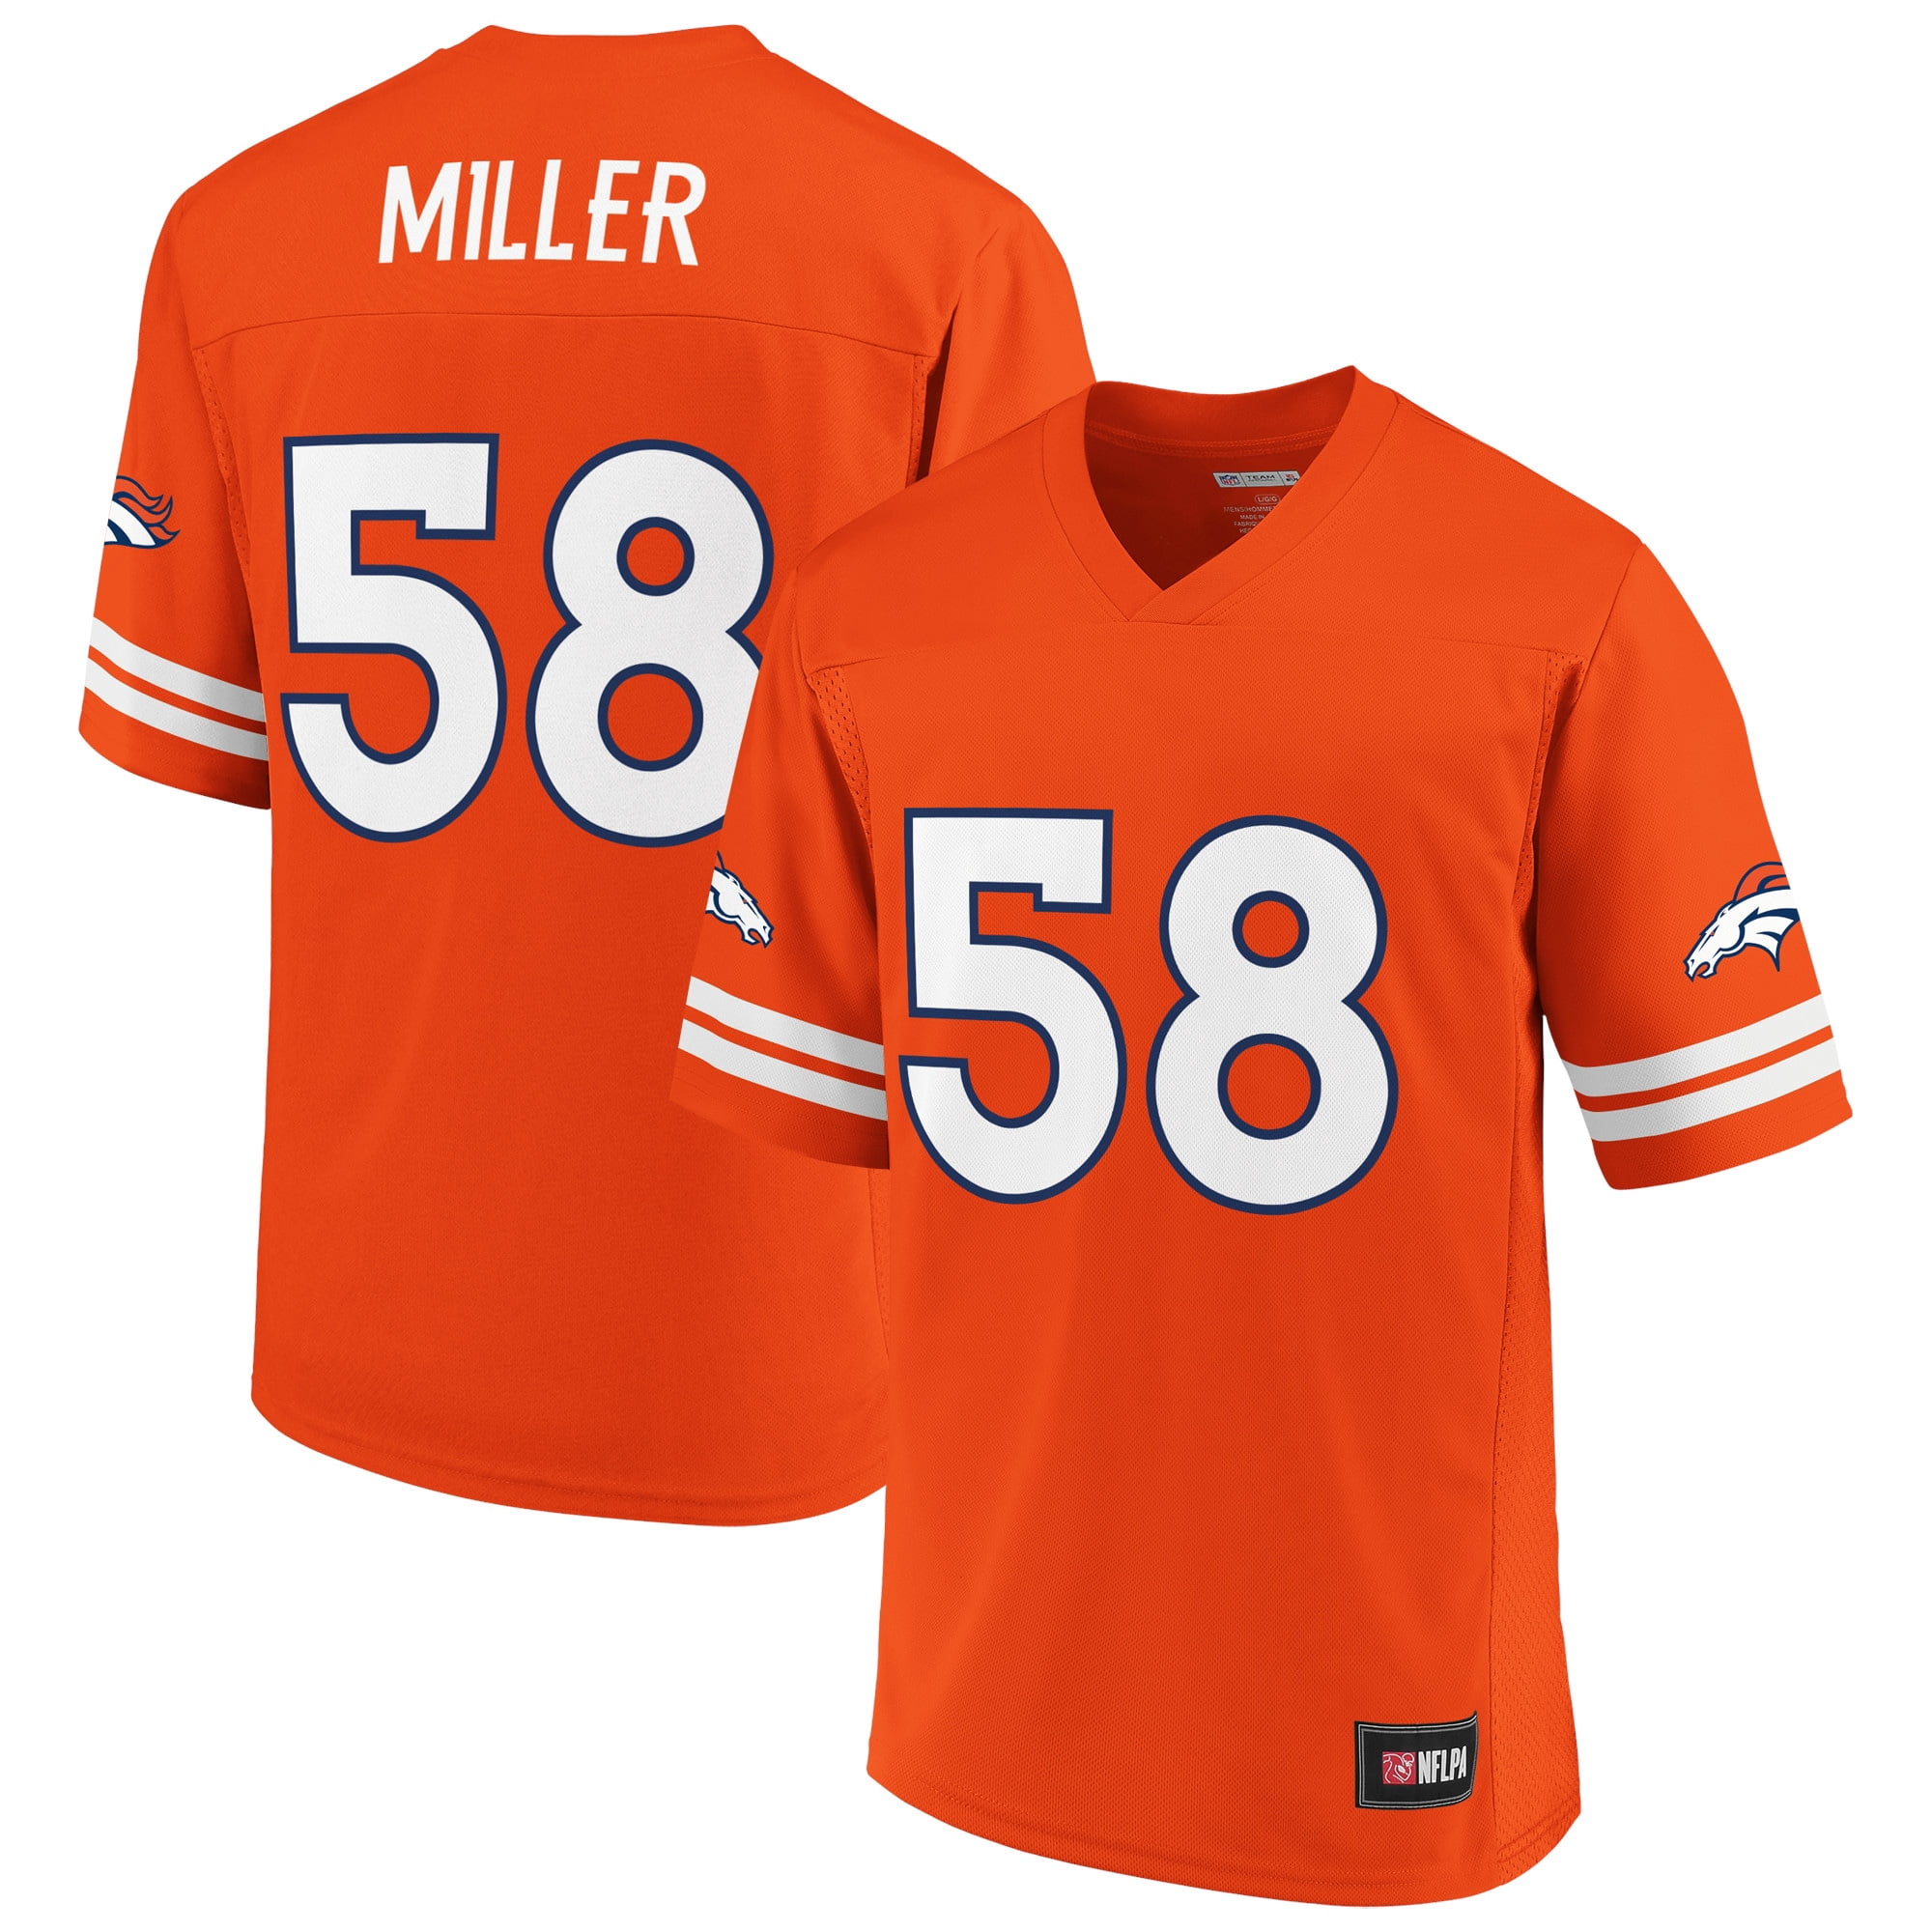 Men's NFL Pro Line by Fanatics Branded Von Miller Orange Denver Broncos  Player Jersey